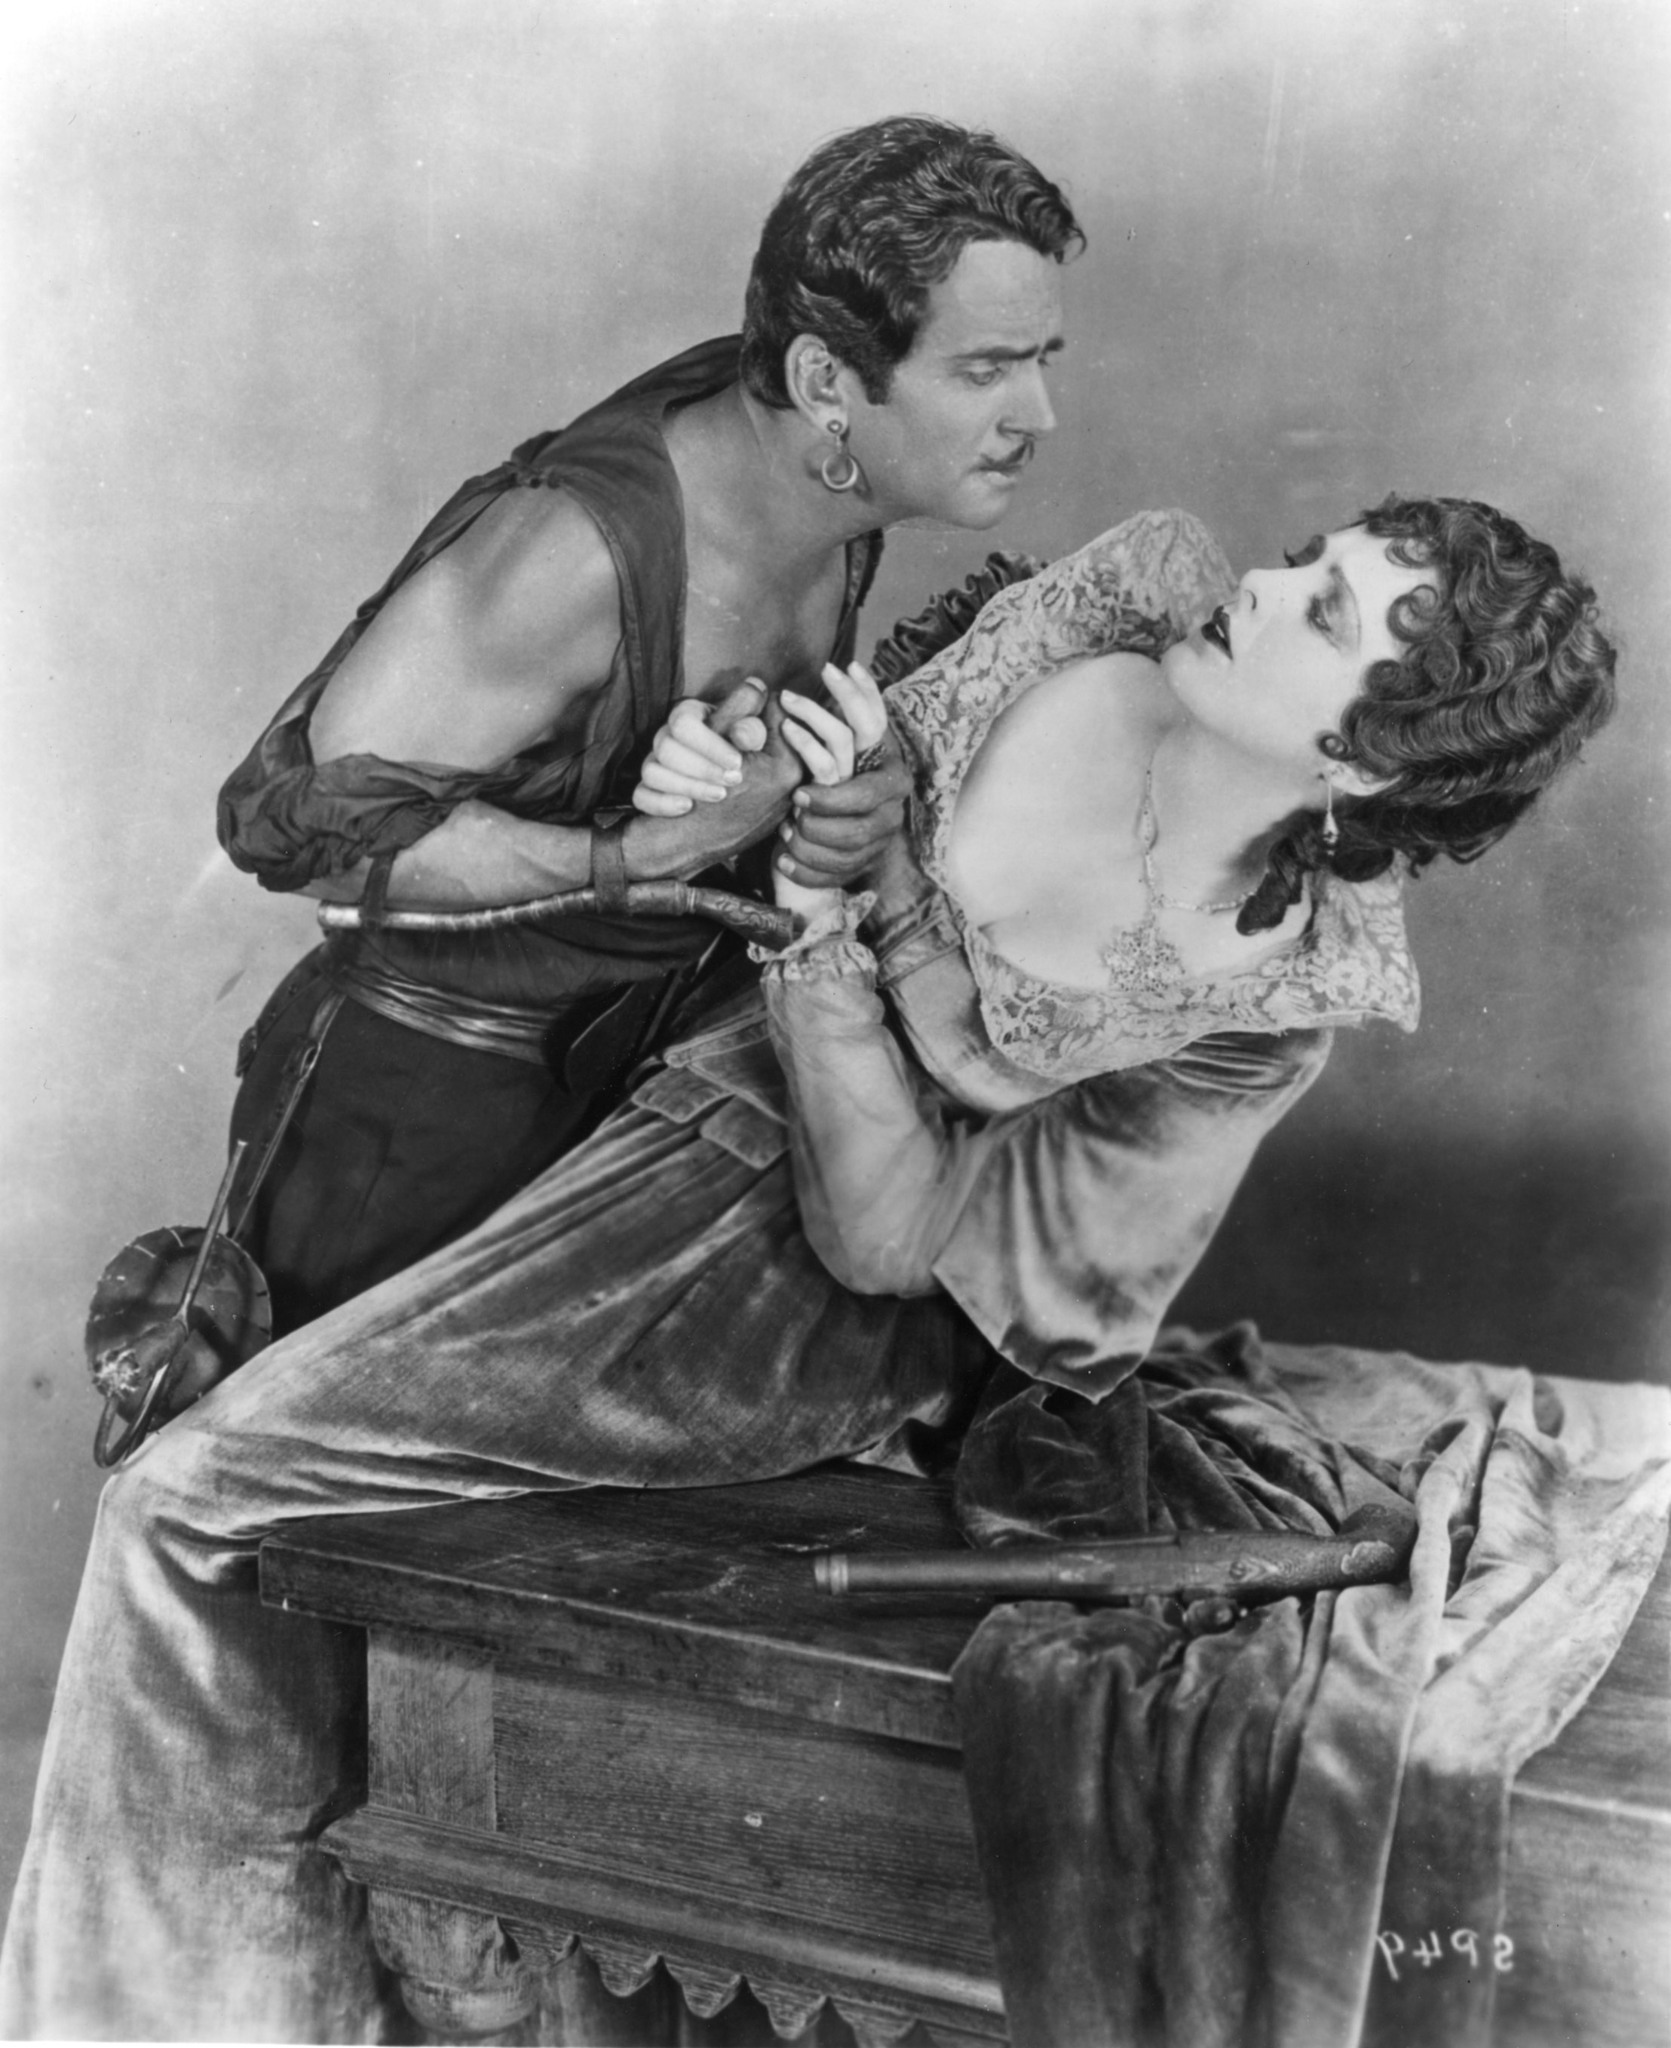 Still of Douglas Fairbanks and Billie Dove in The Black Pirate (1926)